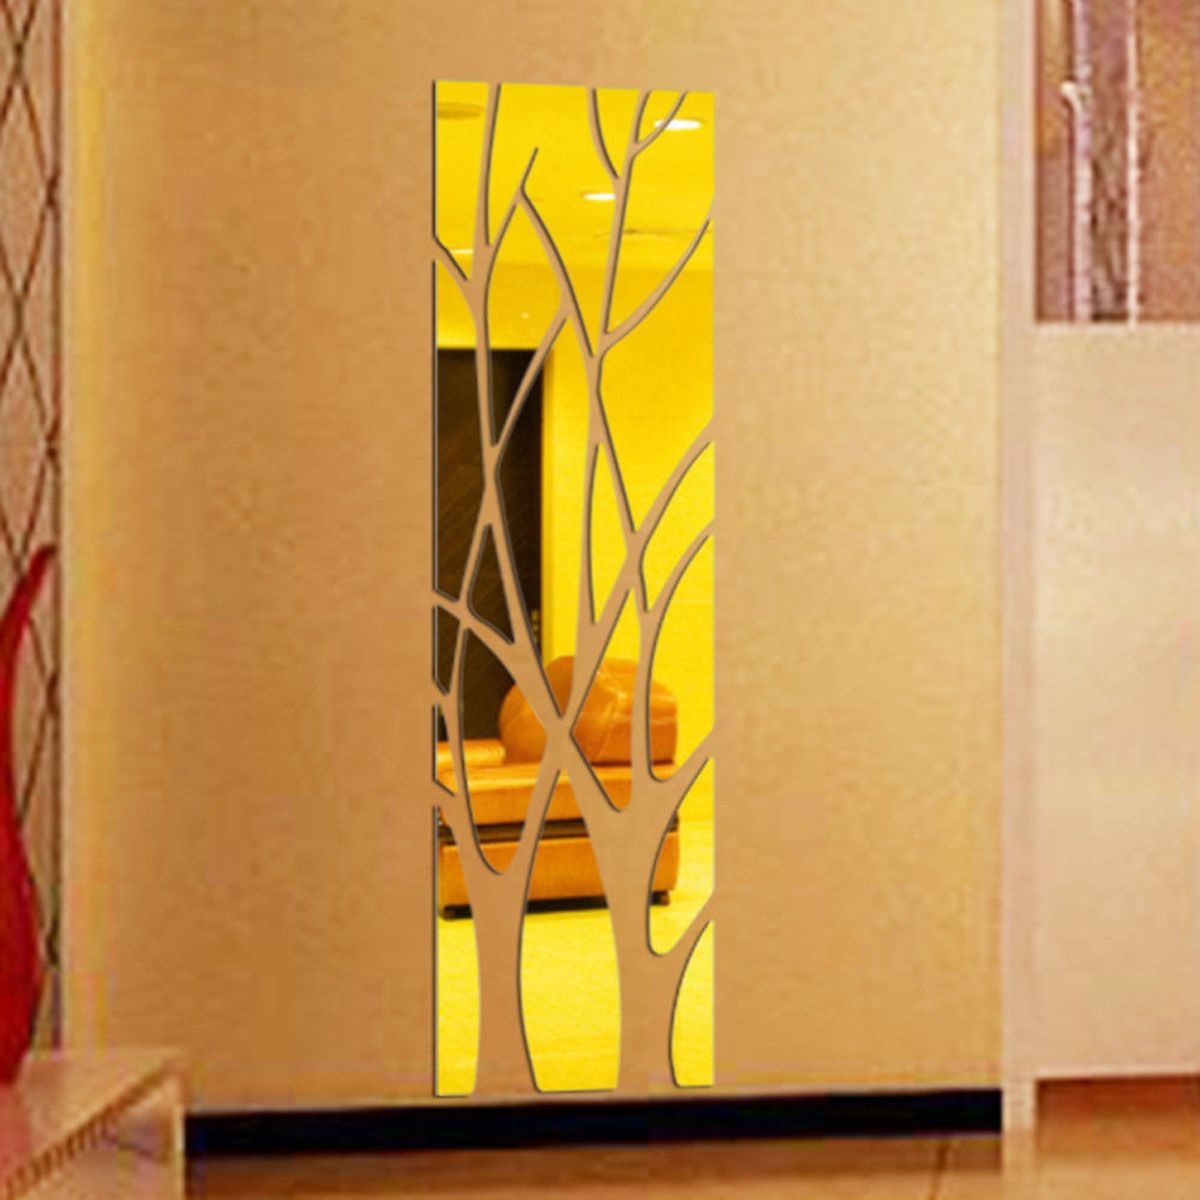 135-x-37cm-Mirror-Effect-Wall-Sticker-DIY-Tree-for-Kitchen-Living-Room-Decor-1623886